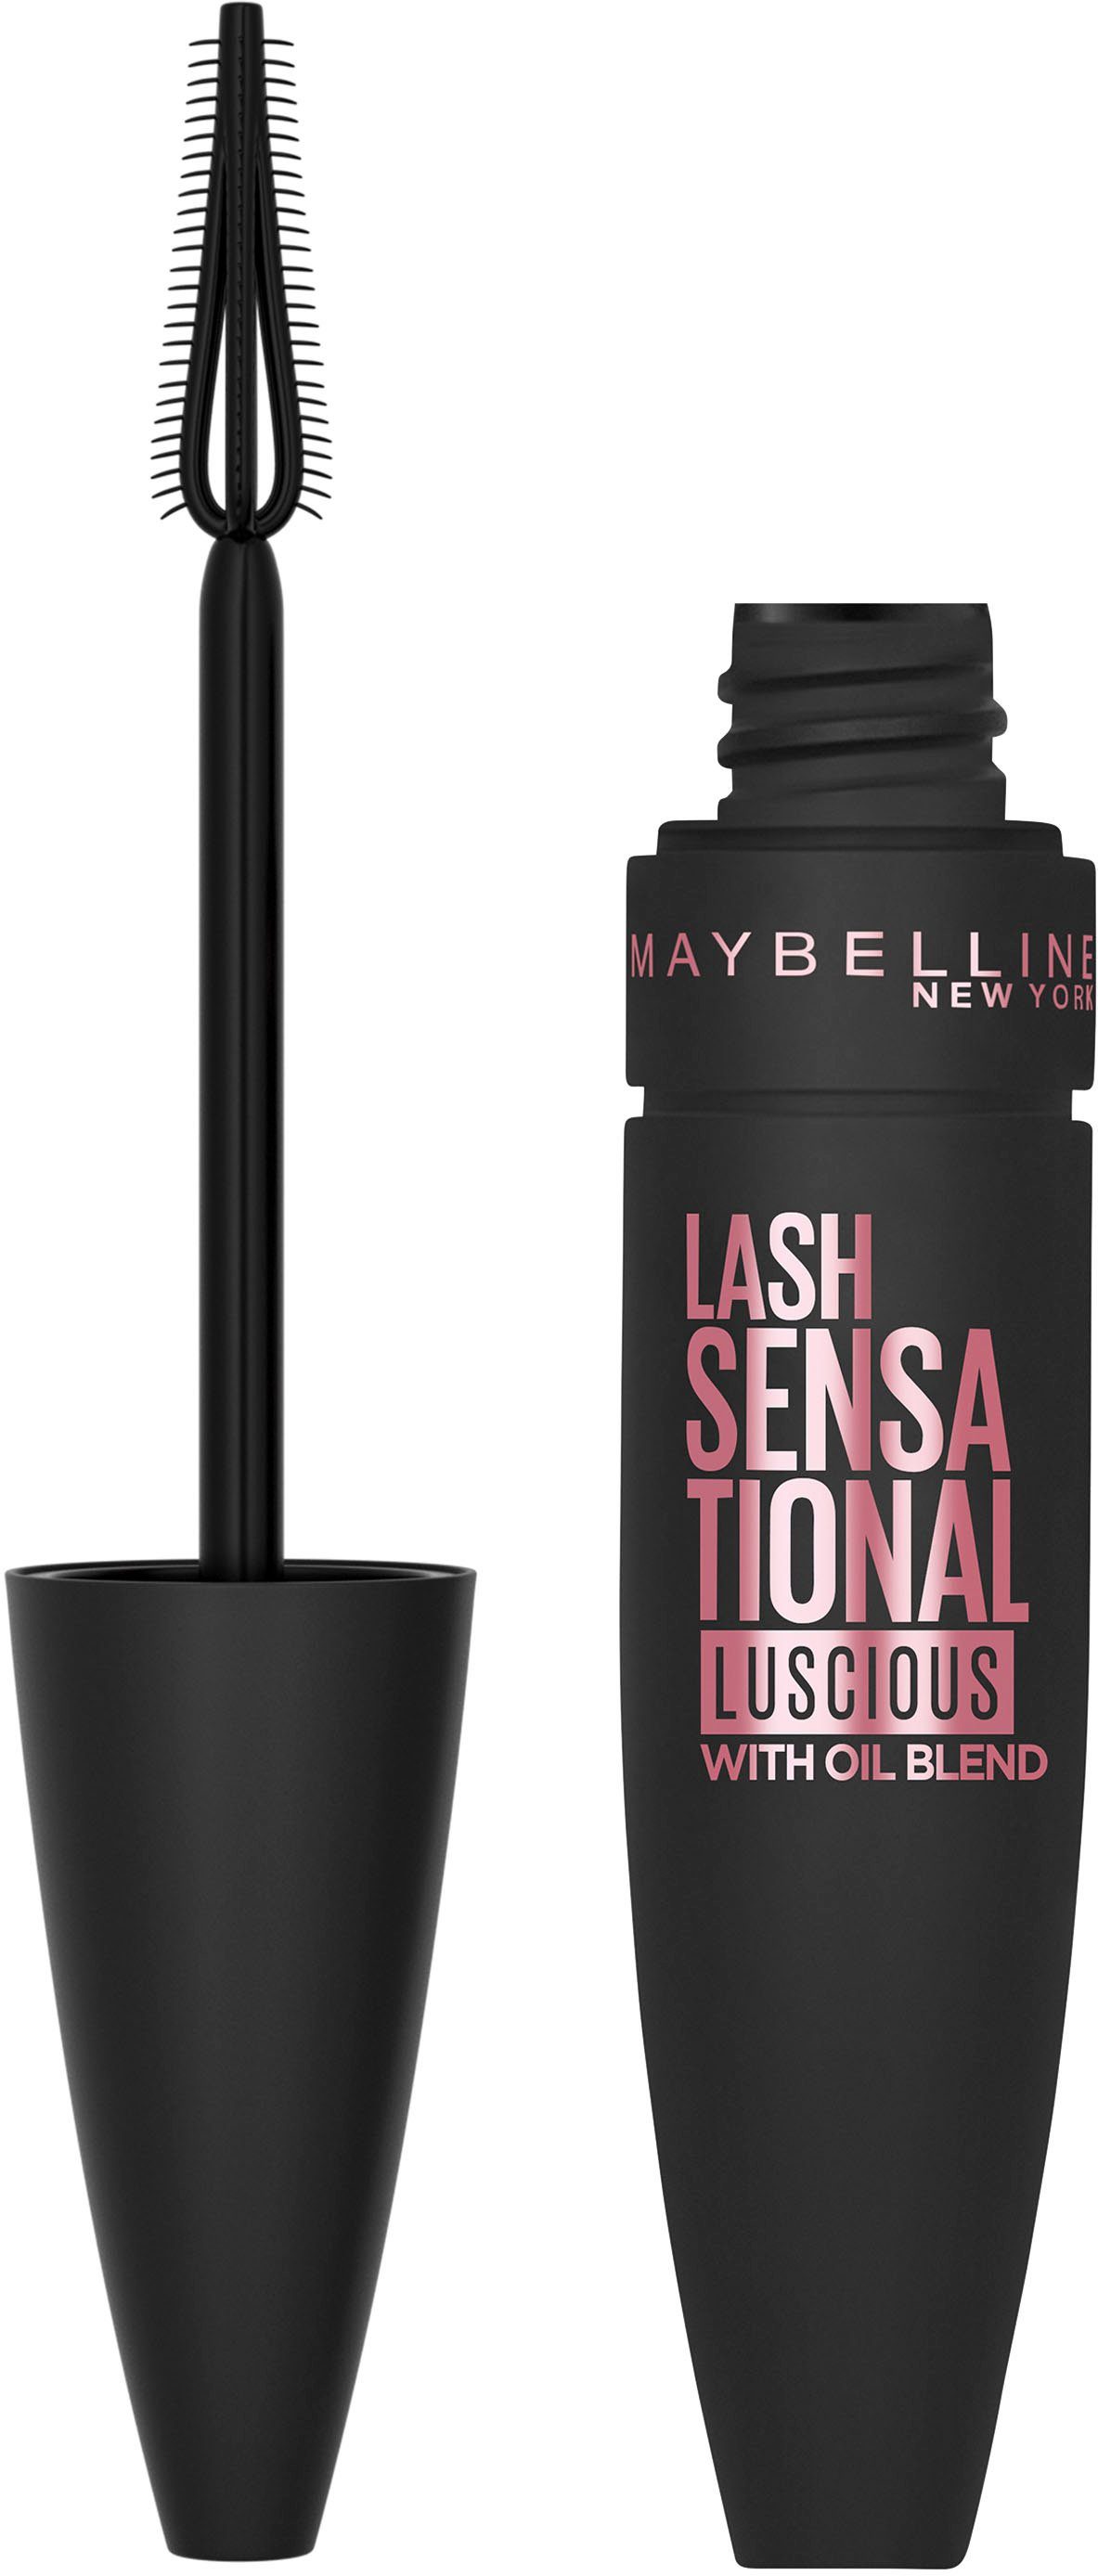 YORK Lash Sensational MAYBELLINE Mascara NEW Luscious